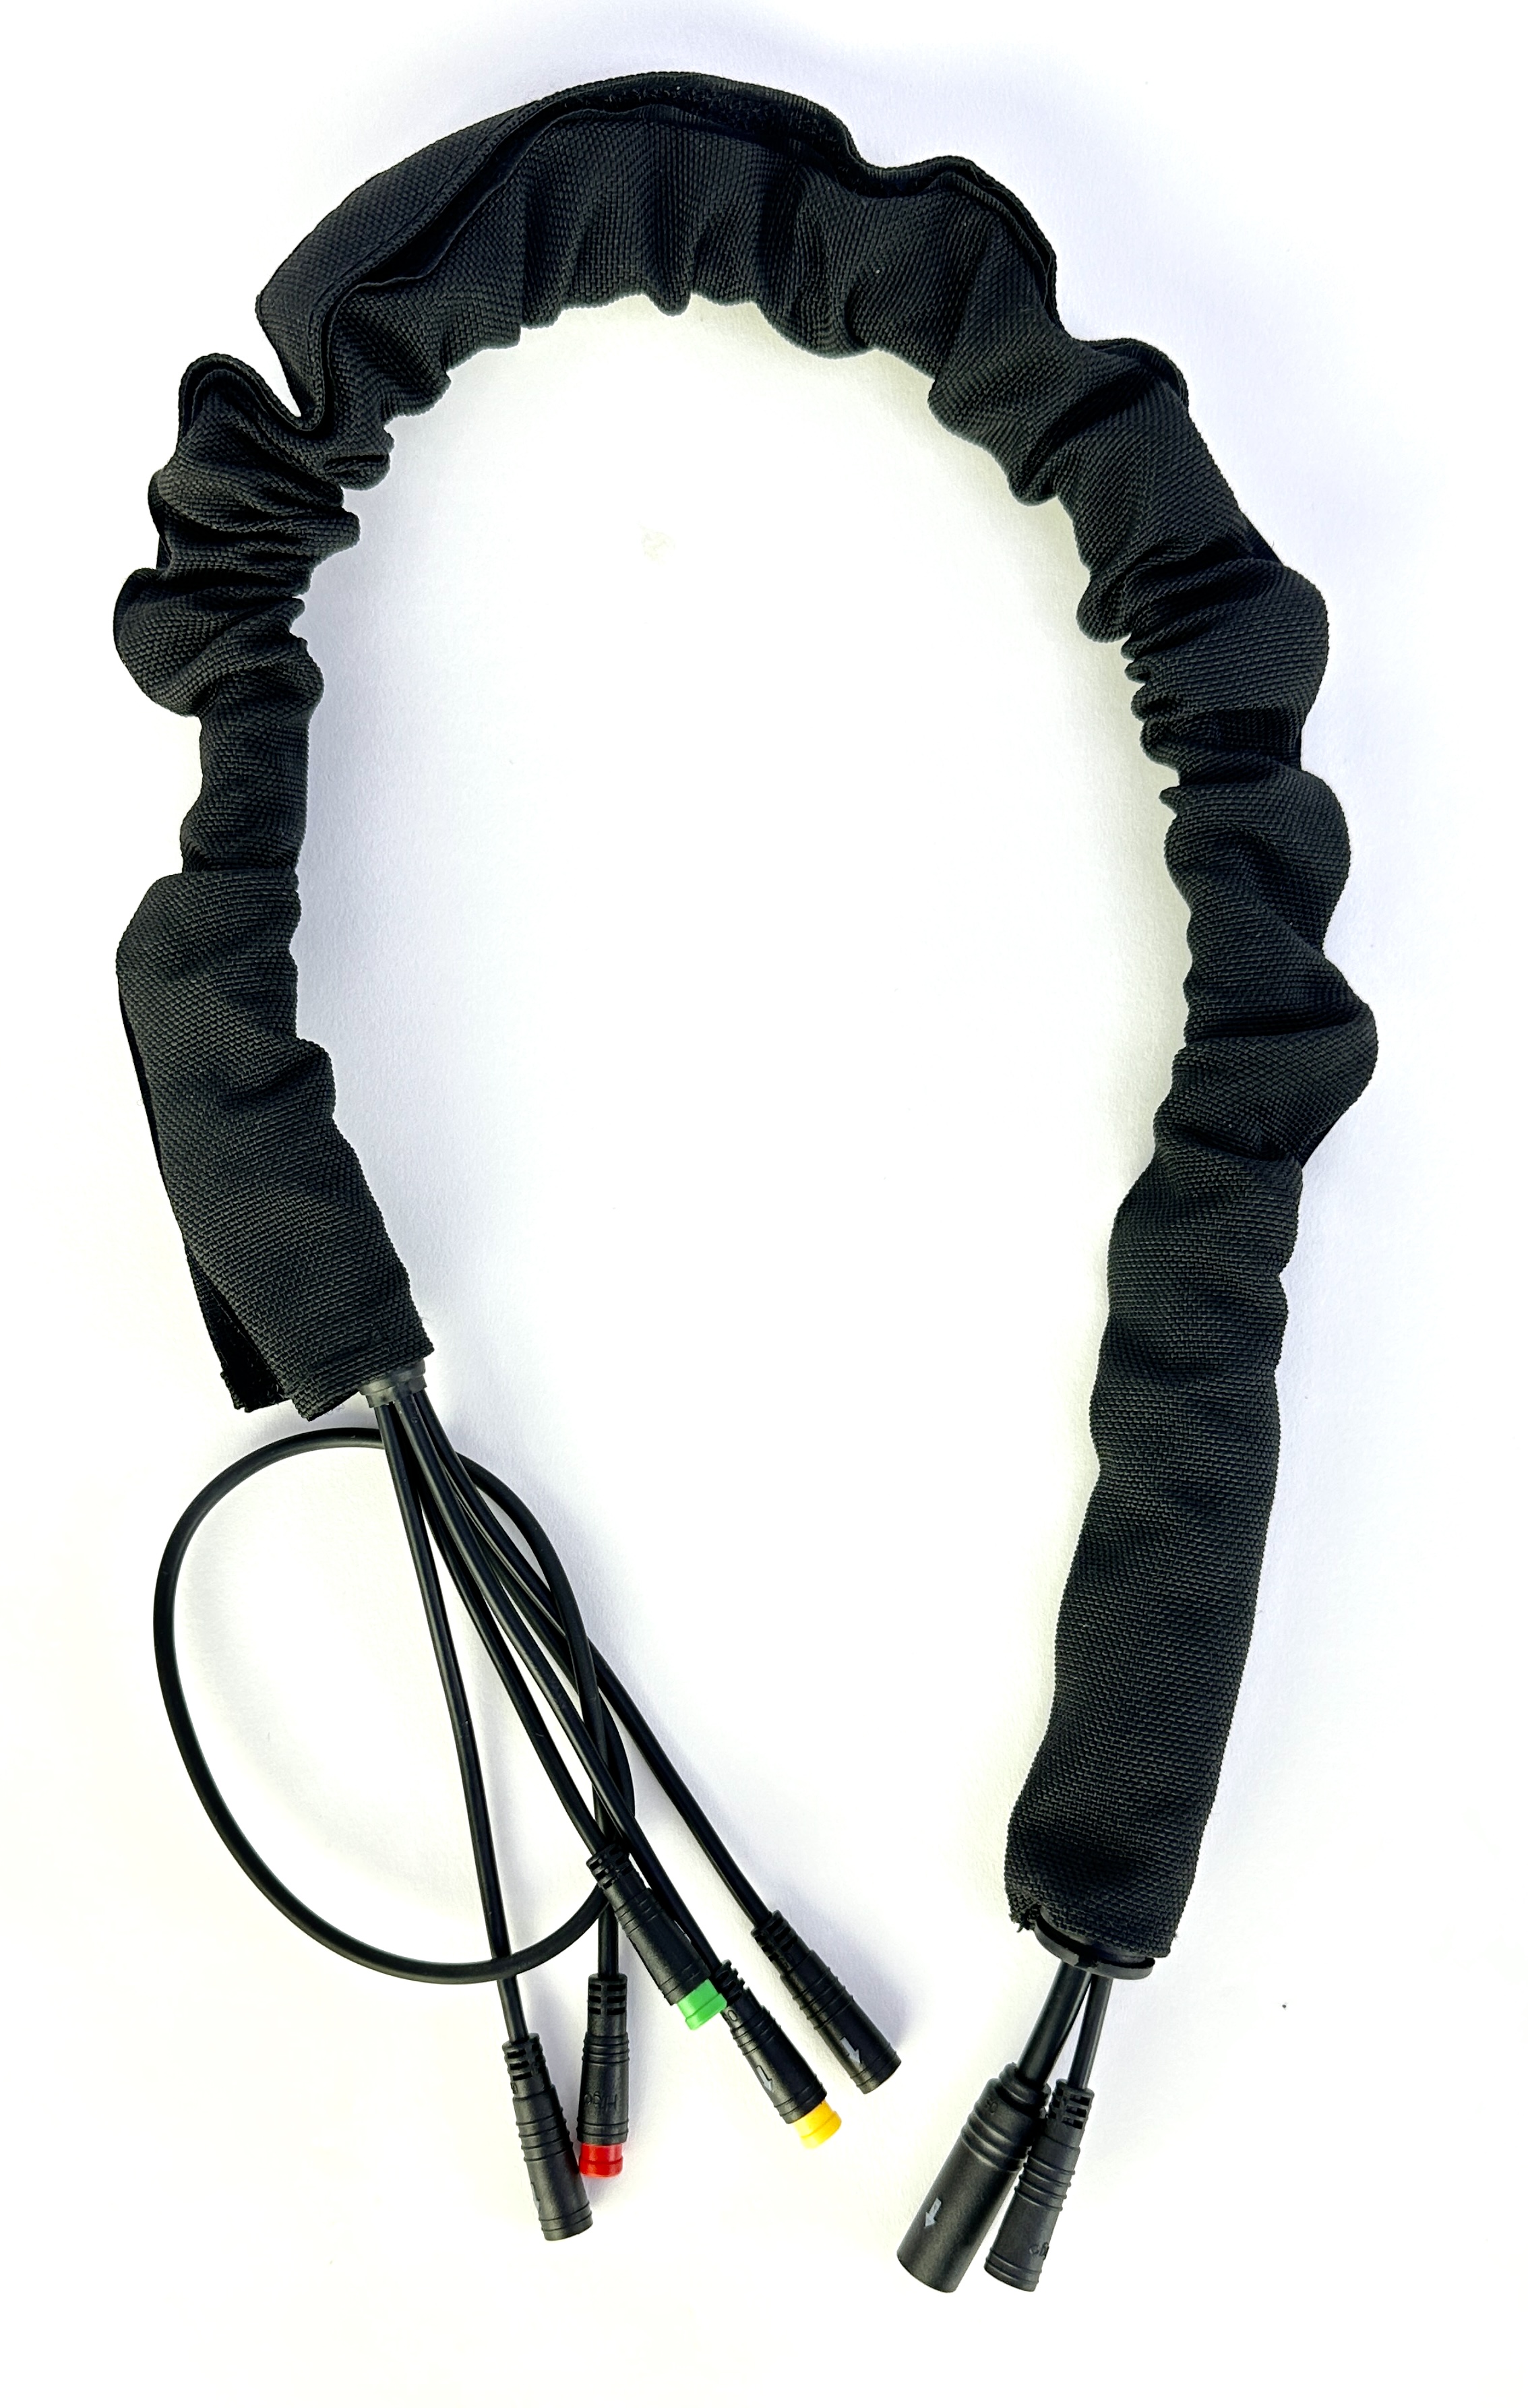 Juego de cables 1T4 Bafang 70 cmc on cable de prolongación de 2PIN en manguera de protección de cables